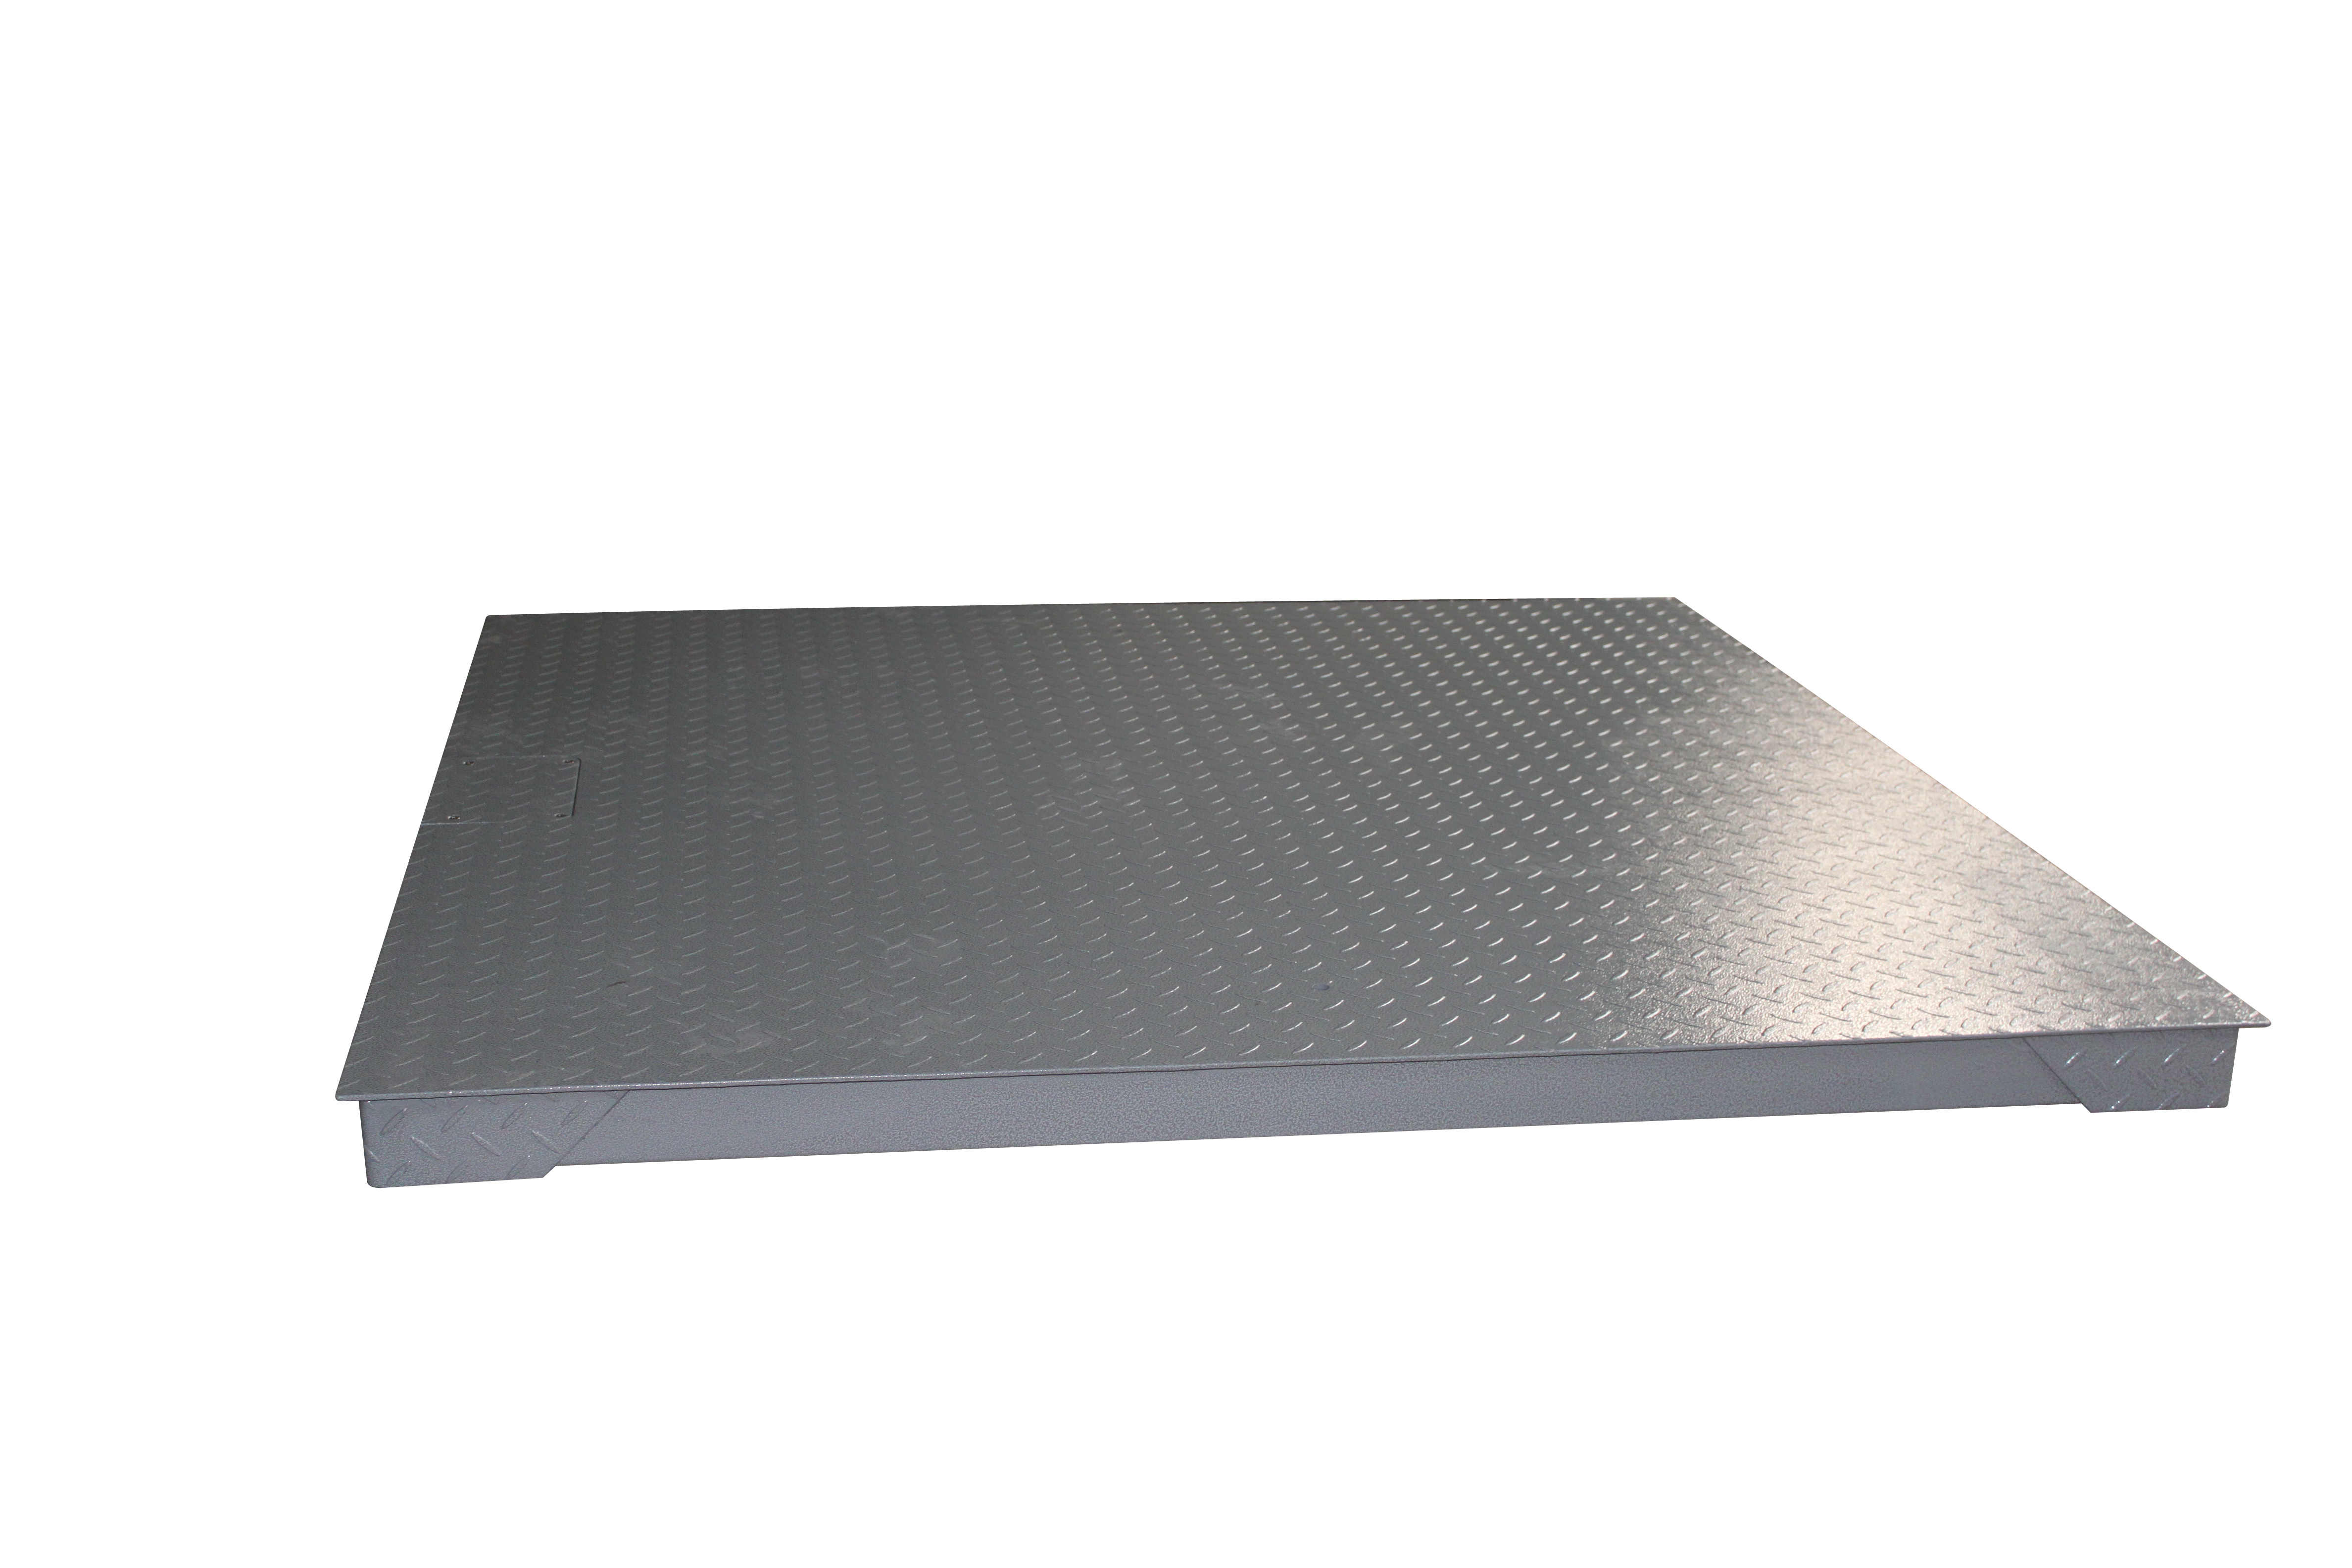 CWS Floor Scales/Pallet Scales Range